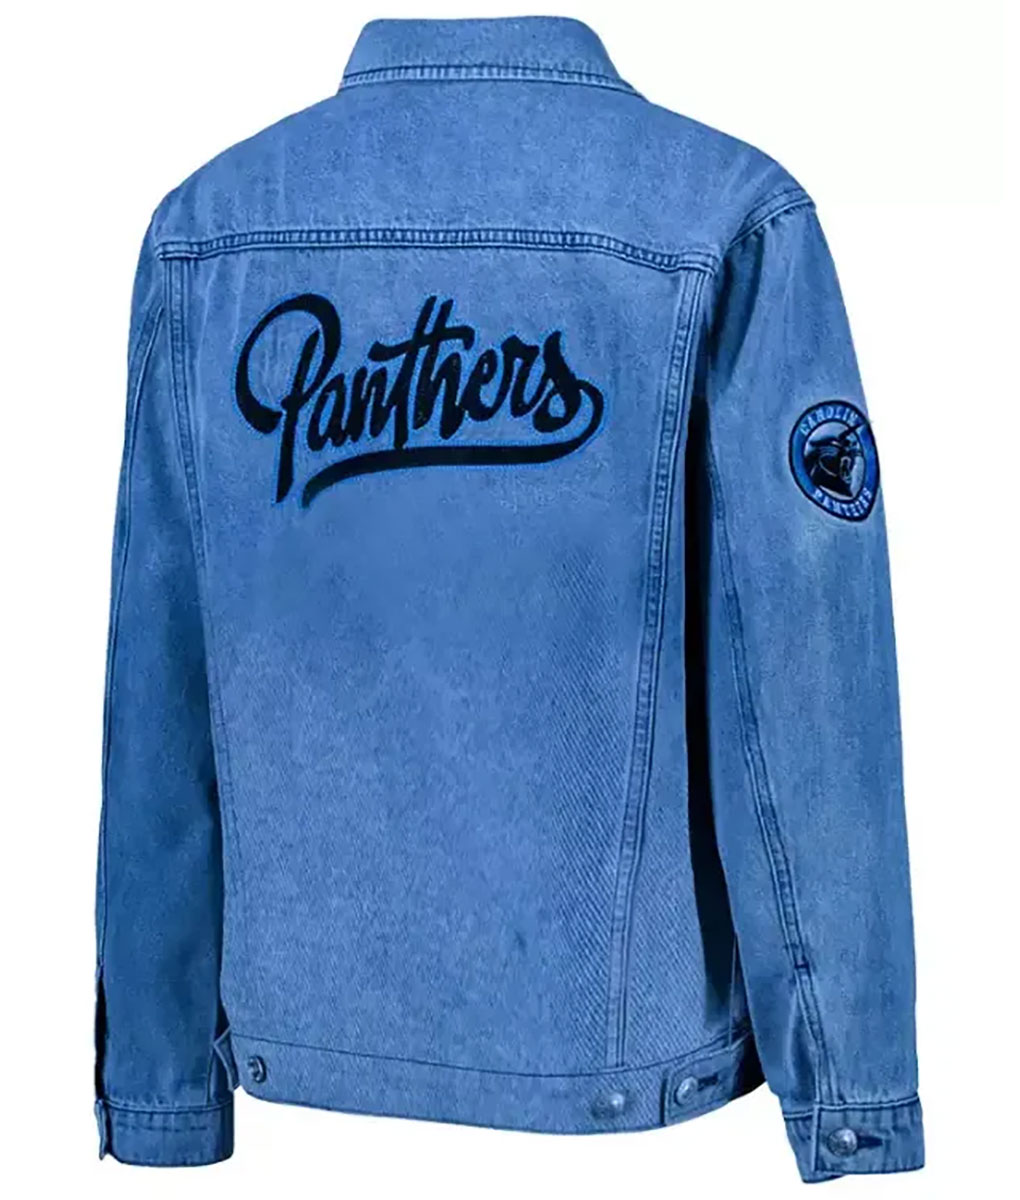 Carolina Panthers Denim Trucker Jacket (2)